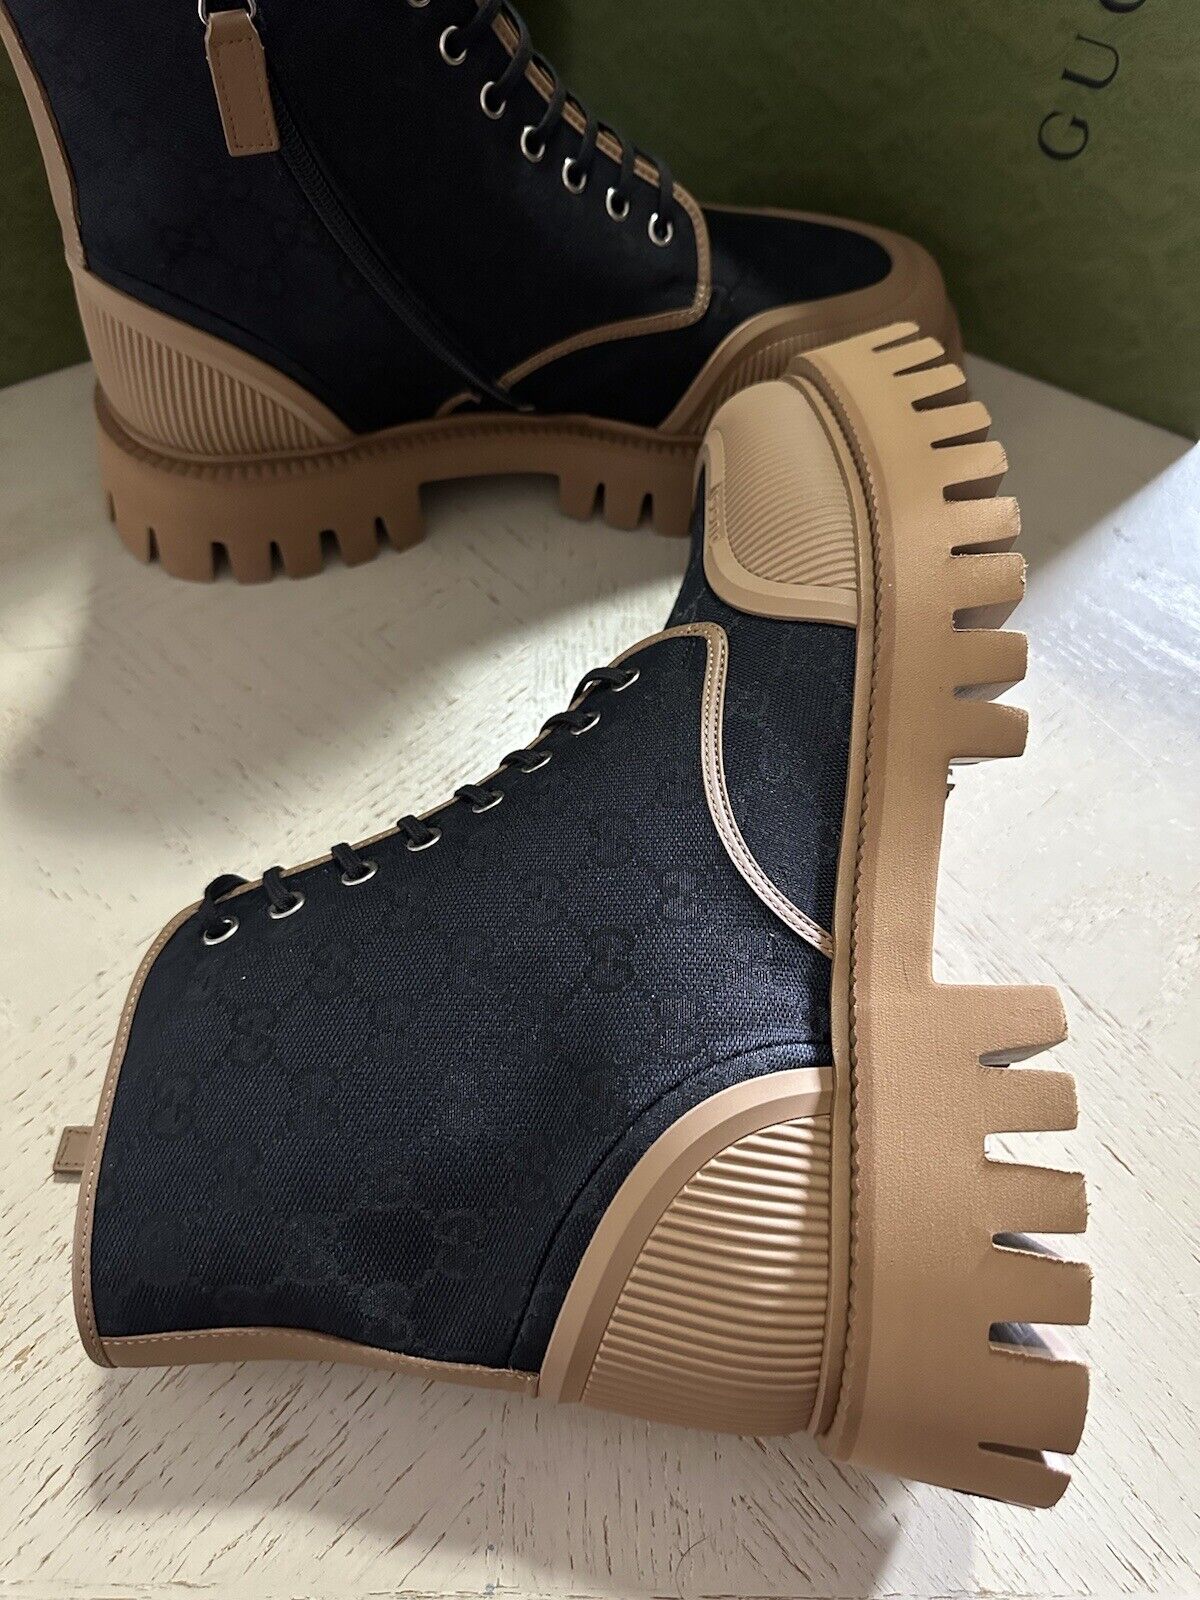 NIB Gucci Men GG Logo Canvas/Leather Boots Shoes Black/Beige 11 US/10 UK 699970